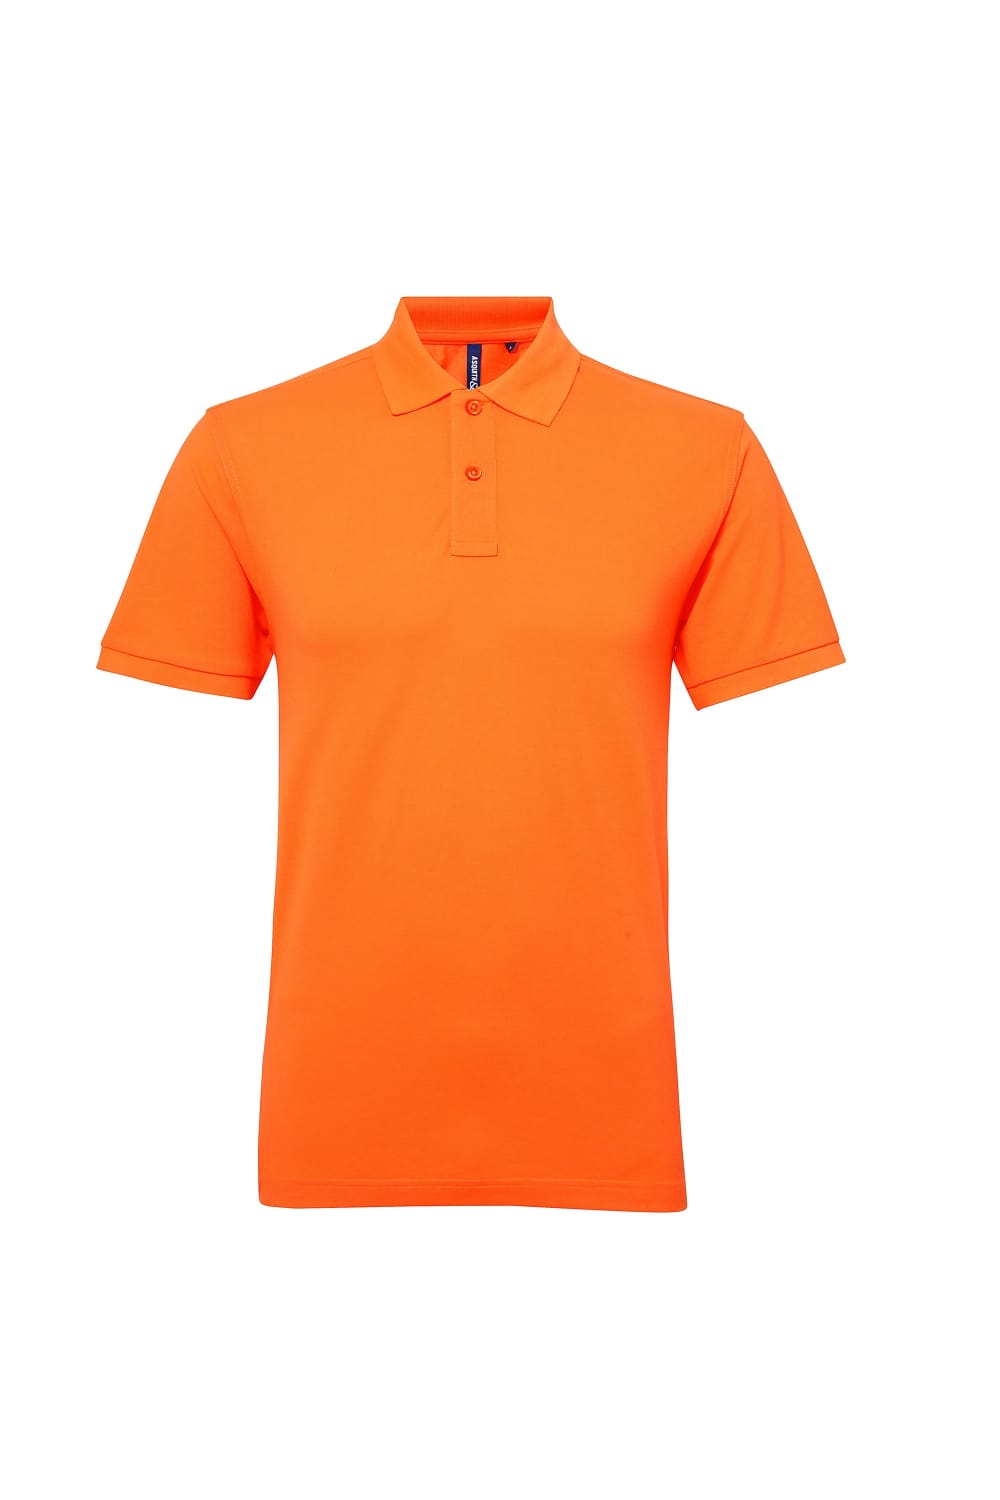 Asquith & Fox Mens Short Sleeve Performance Blend Polo Shirt (Neon Orange)